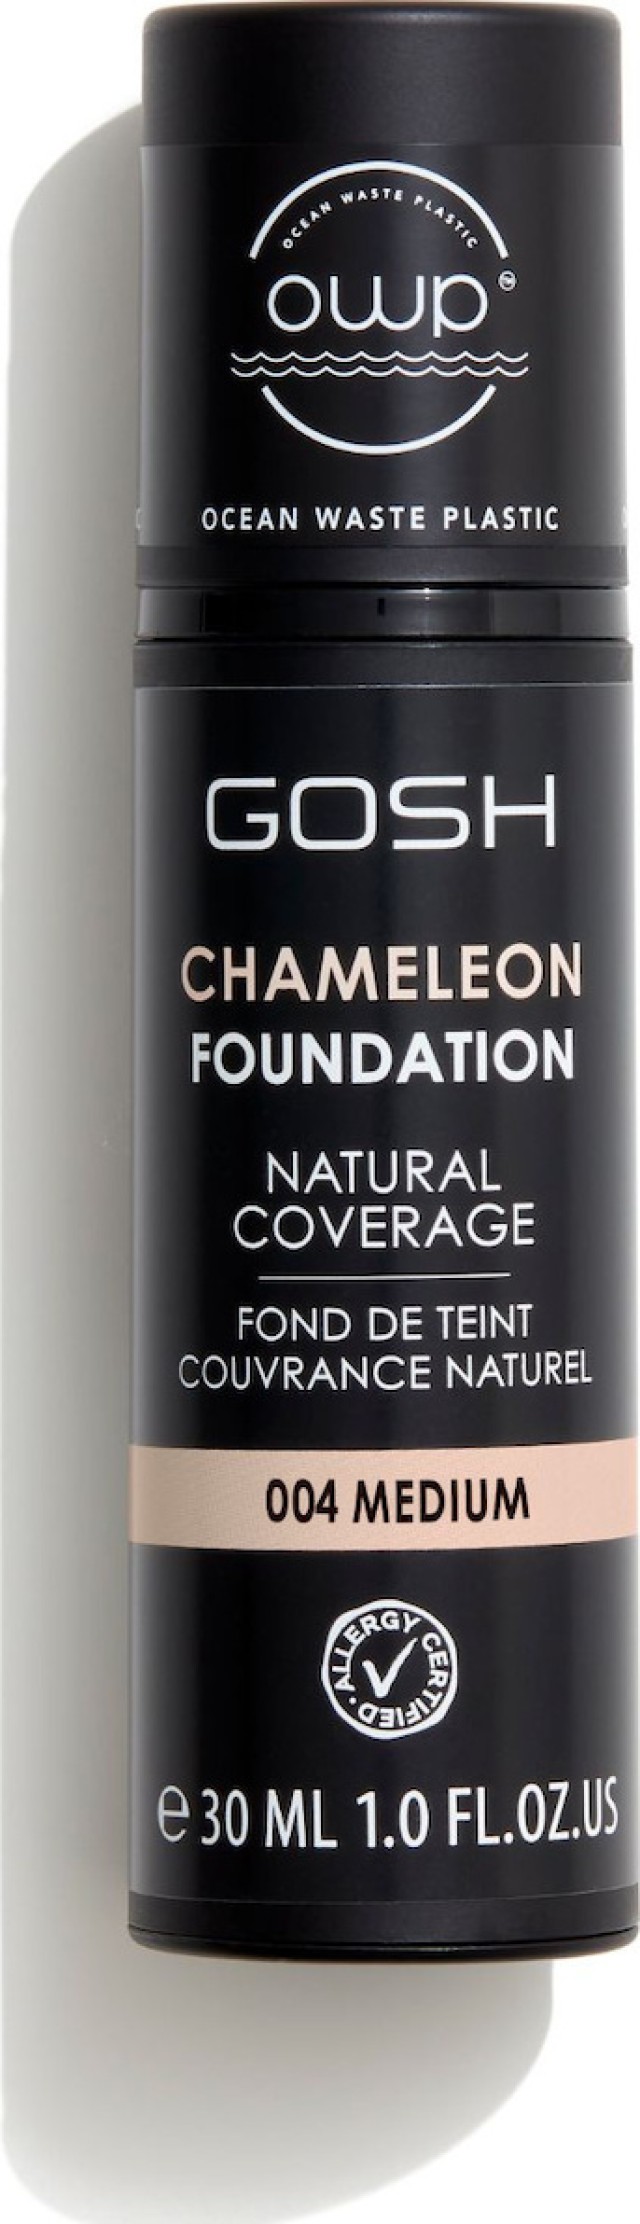 Gosh Chameleon Foundation Fond De Teint 004 Medium Καλυπτικό Make up Μεσαία Απόχρωση 30ml